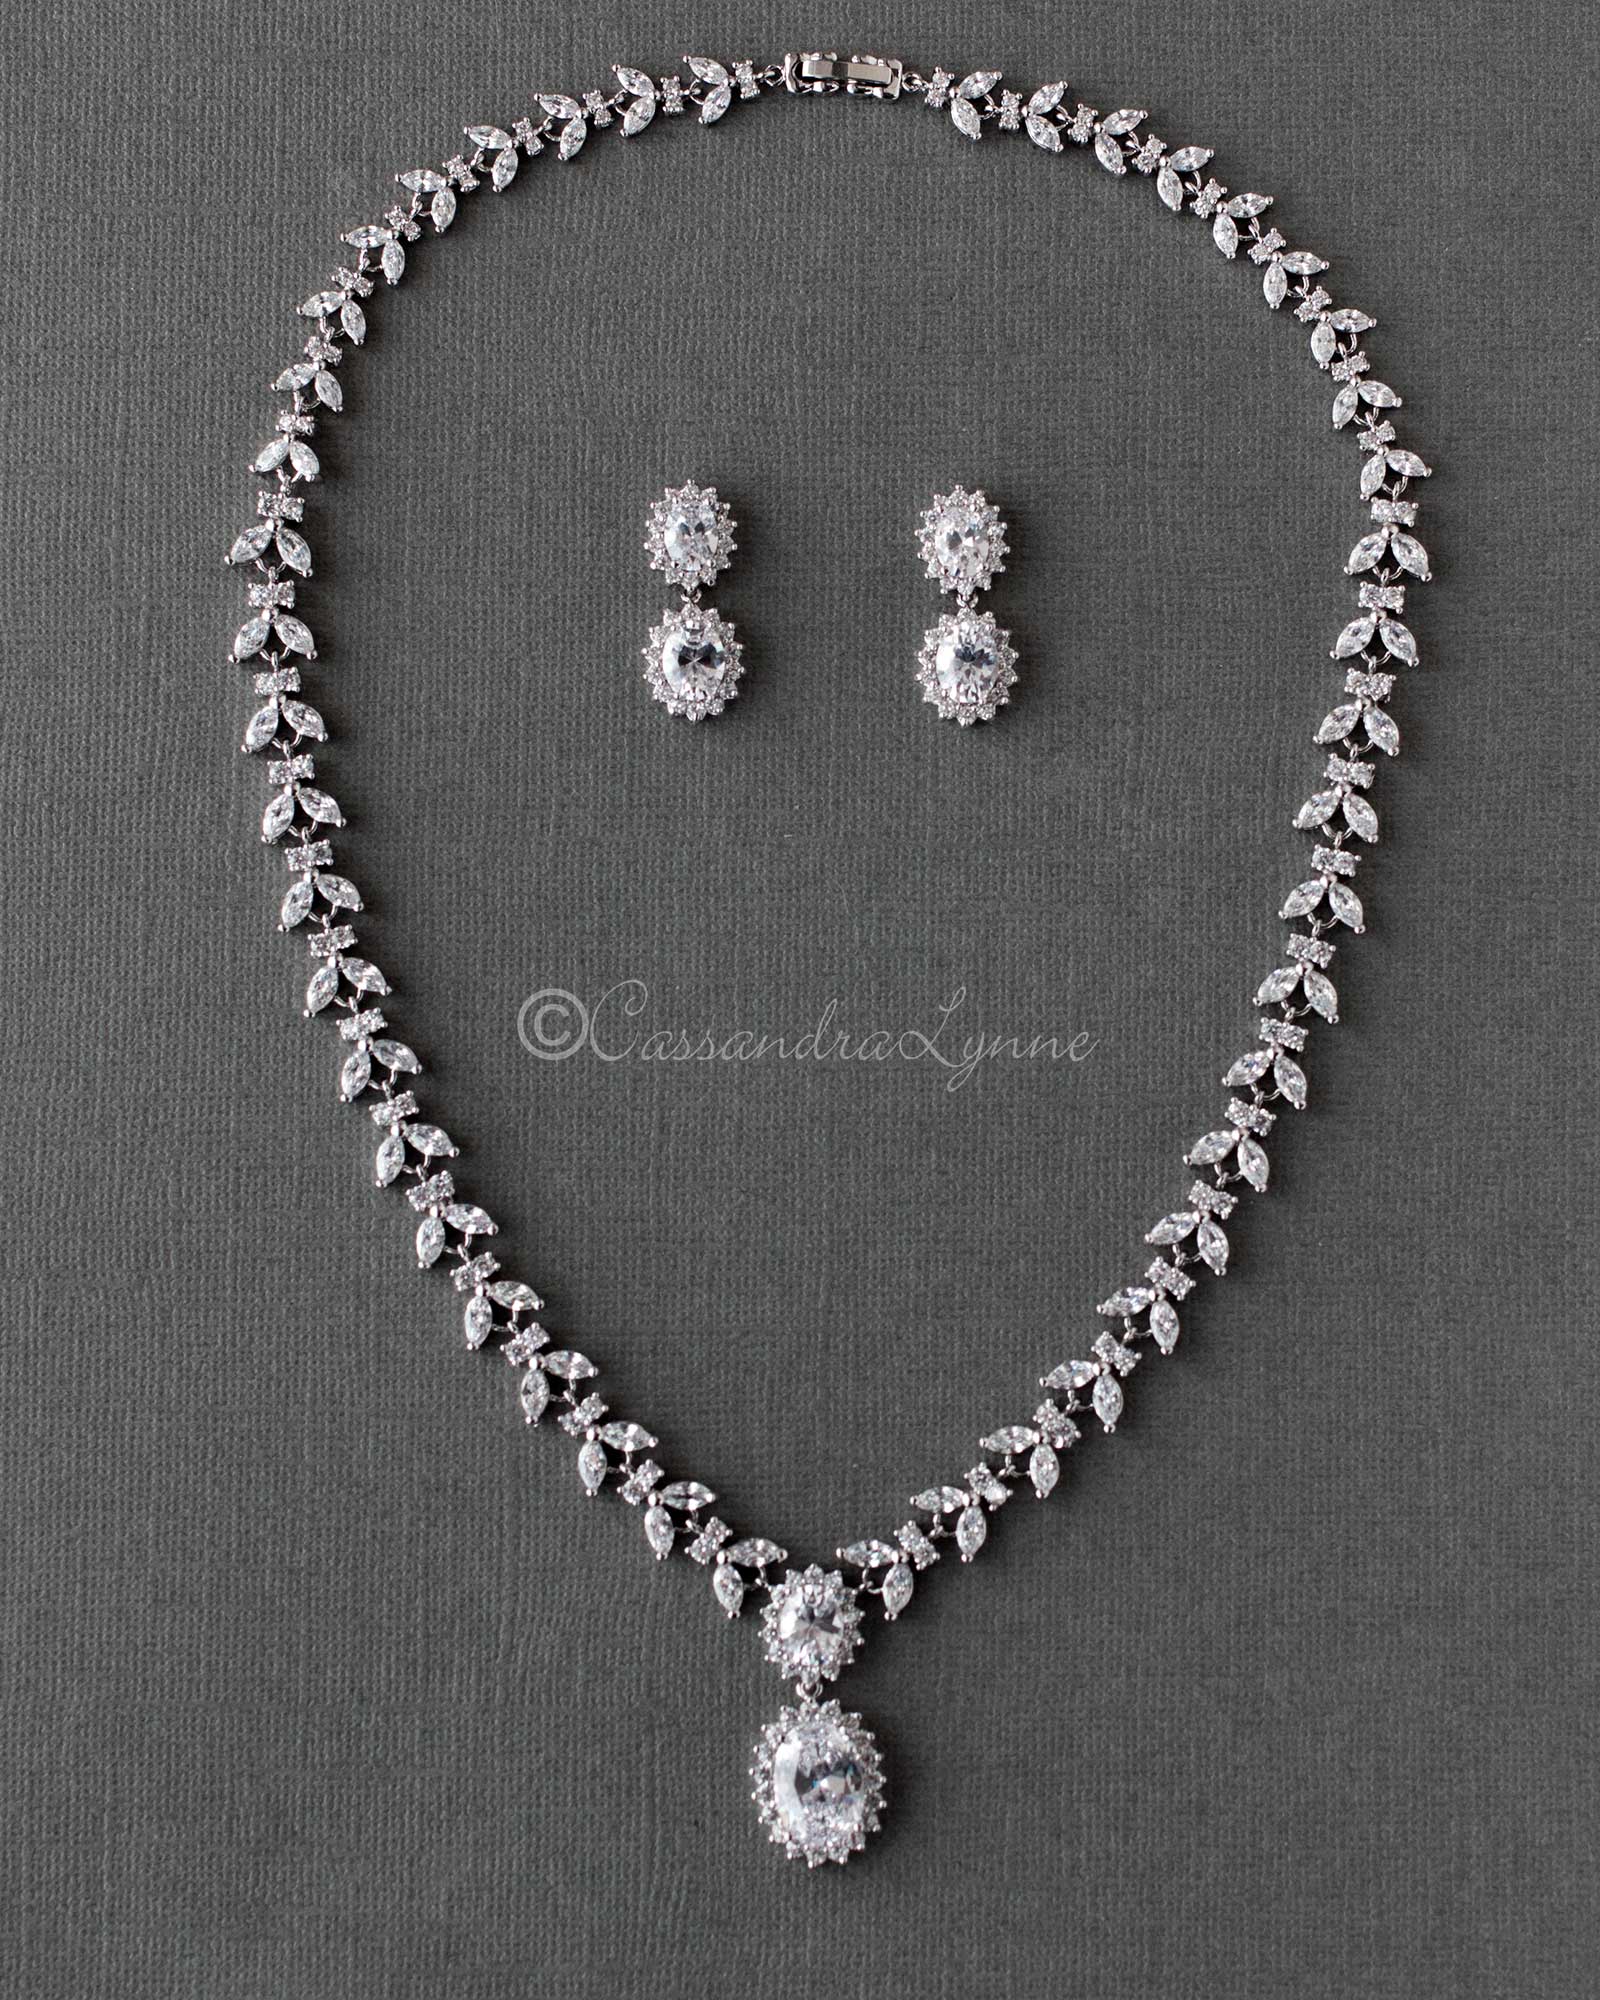 Oval Drops Wedding Necklace and Earrings - Cassandra Lynne